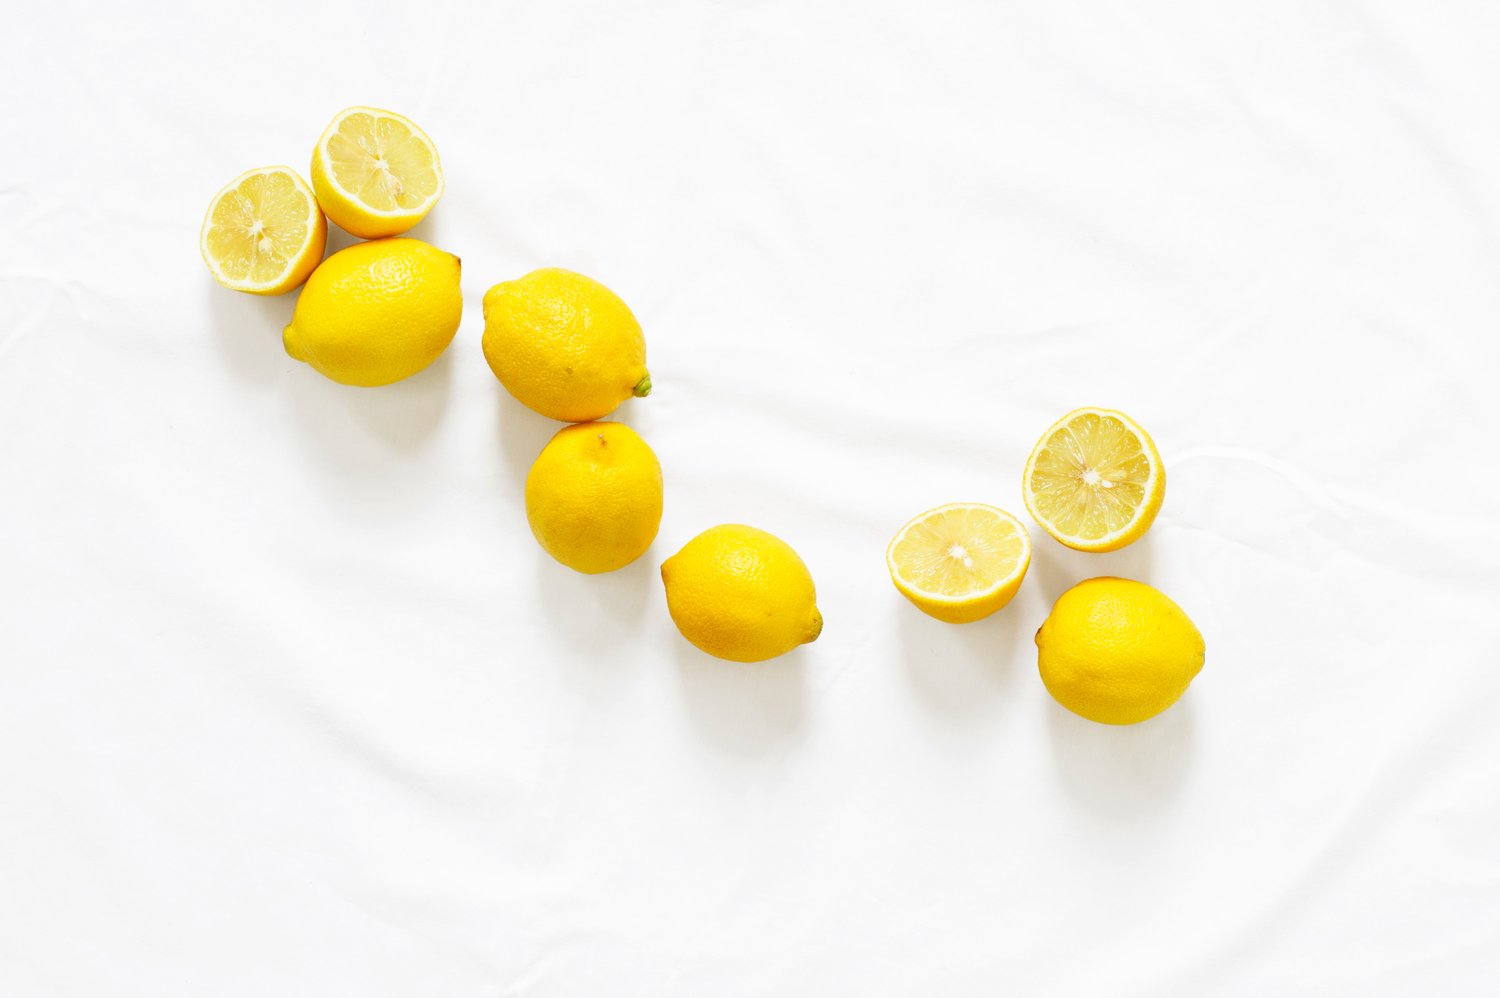 Lemons are a girl's best friend